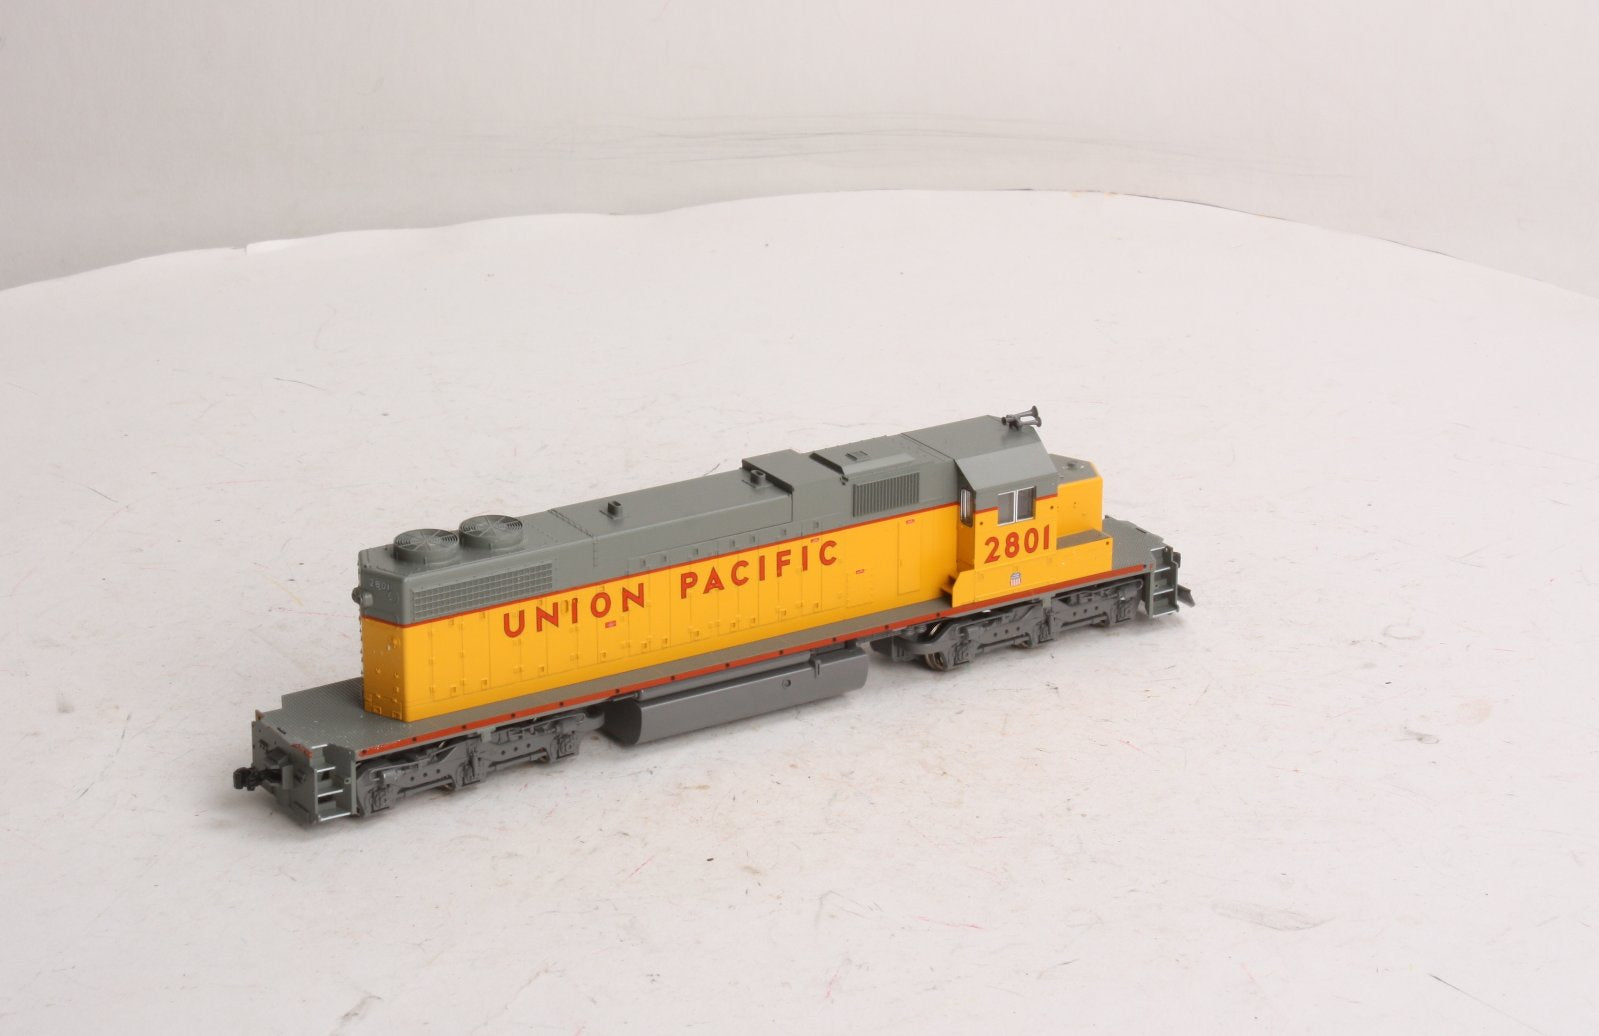 Kato 37-6501 Union Pacific EMD SD38-2 Diesel Locomotive #2801